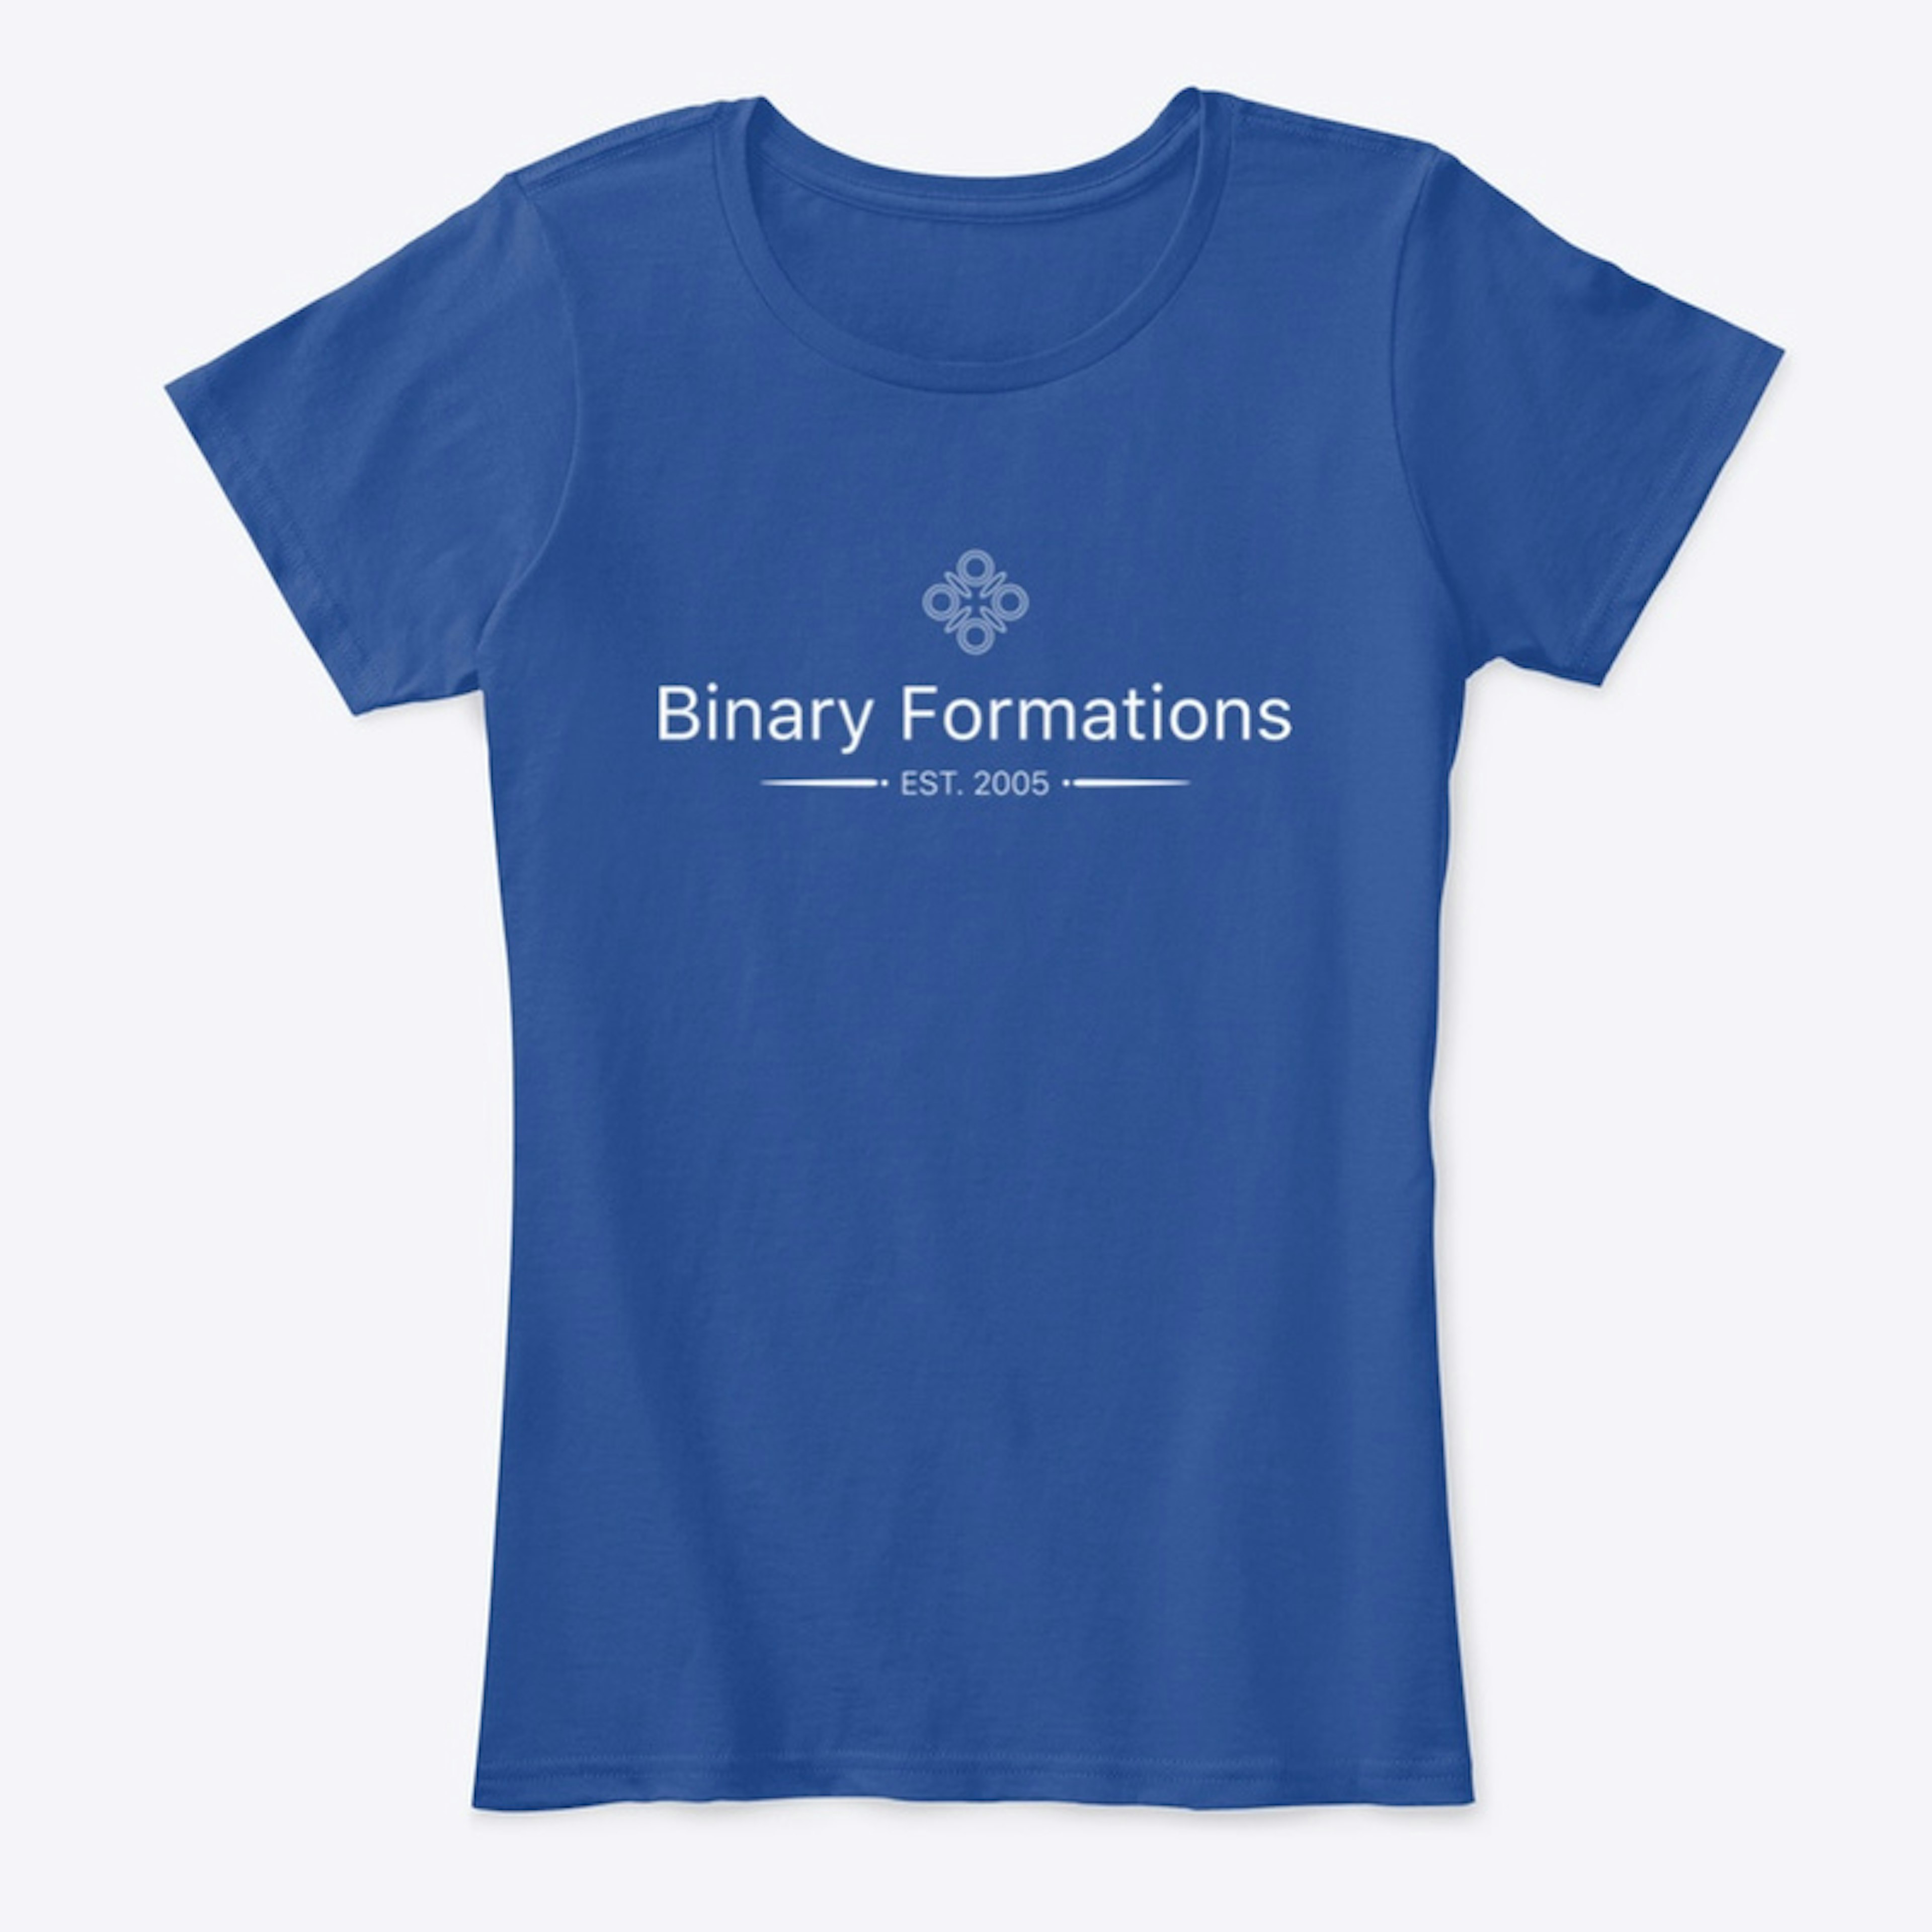 Binary Formations Merchandise